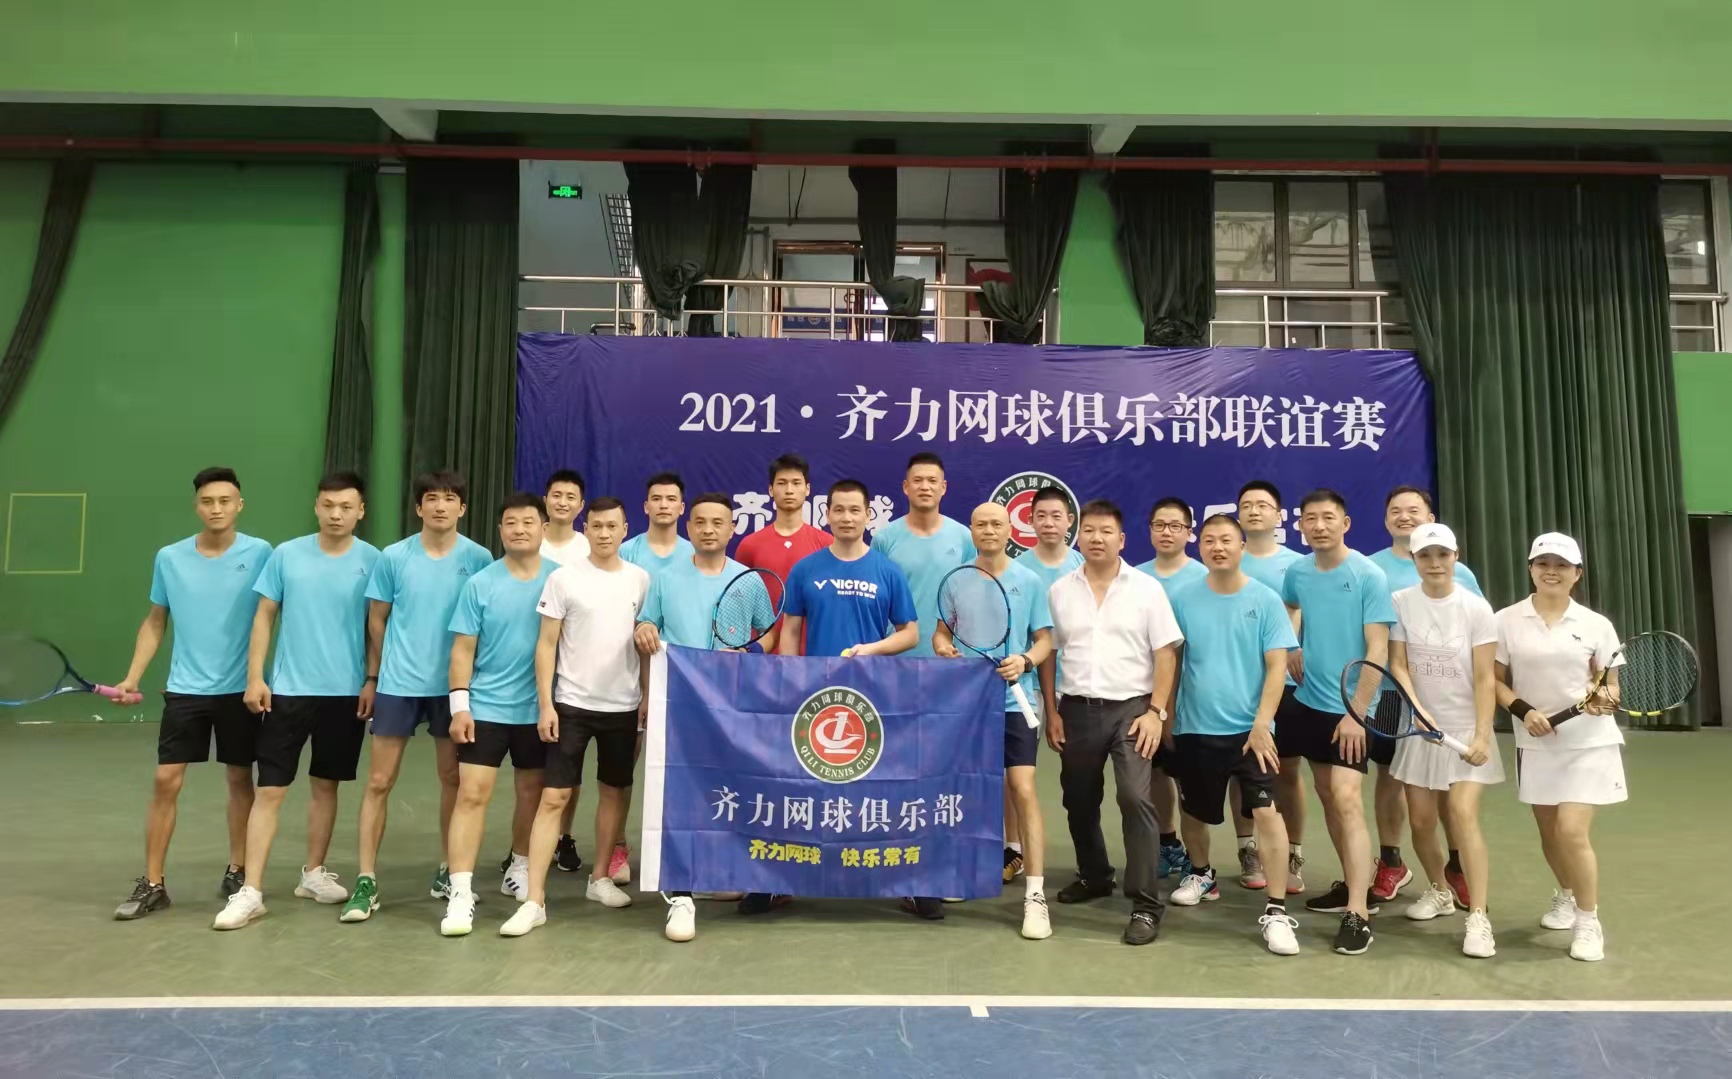 2021 Qili Tennis Club Friendship Tournament